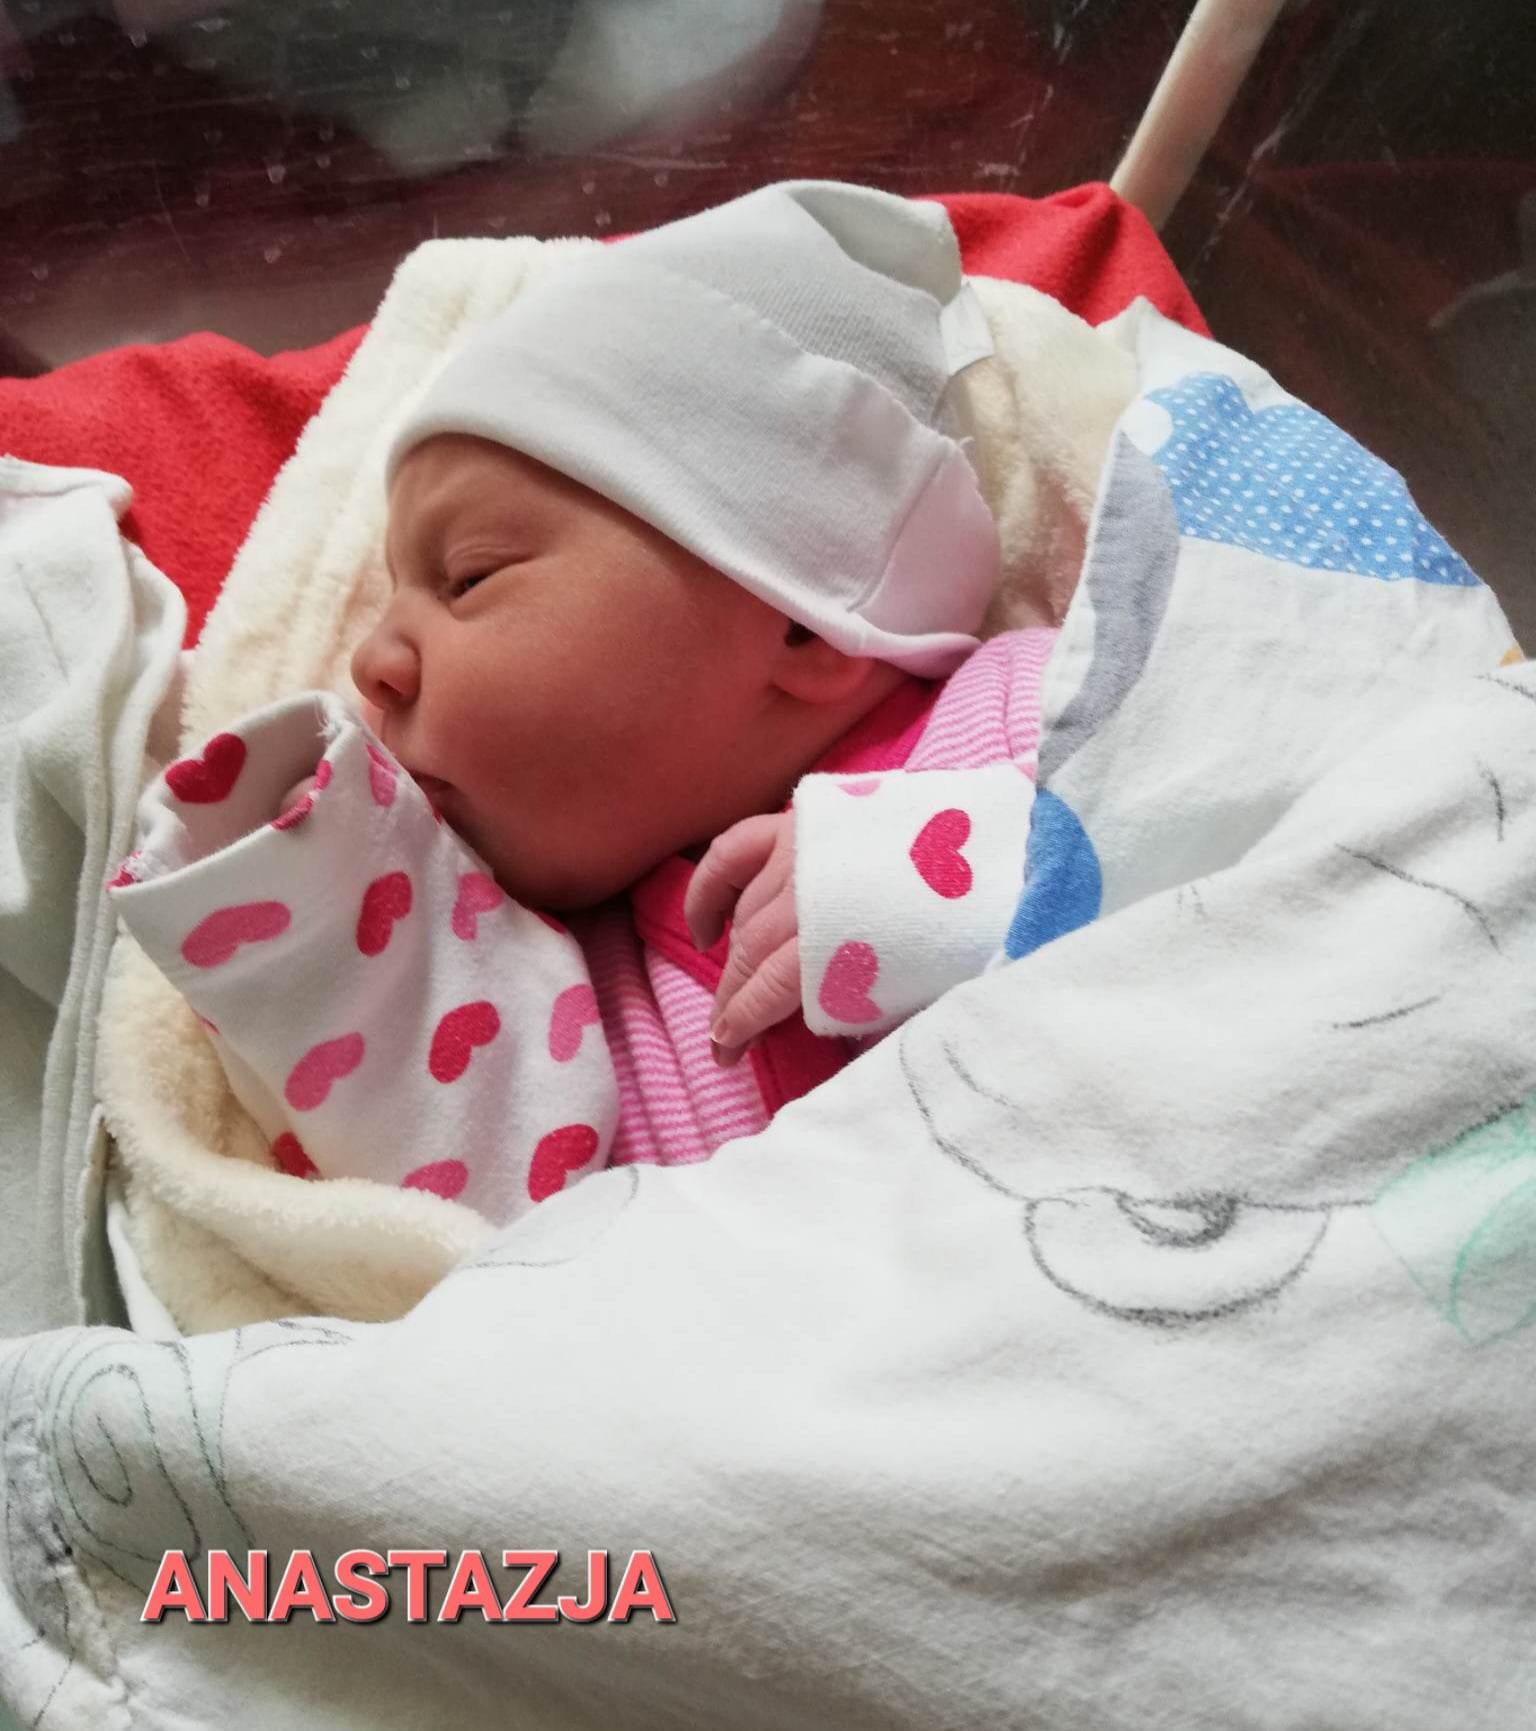 Anastazja – Nasi milusińscy